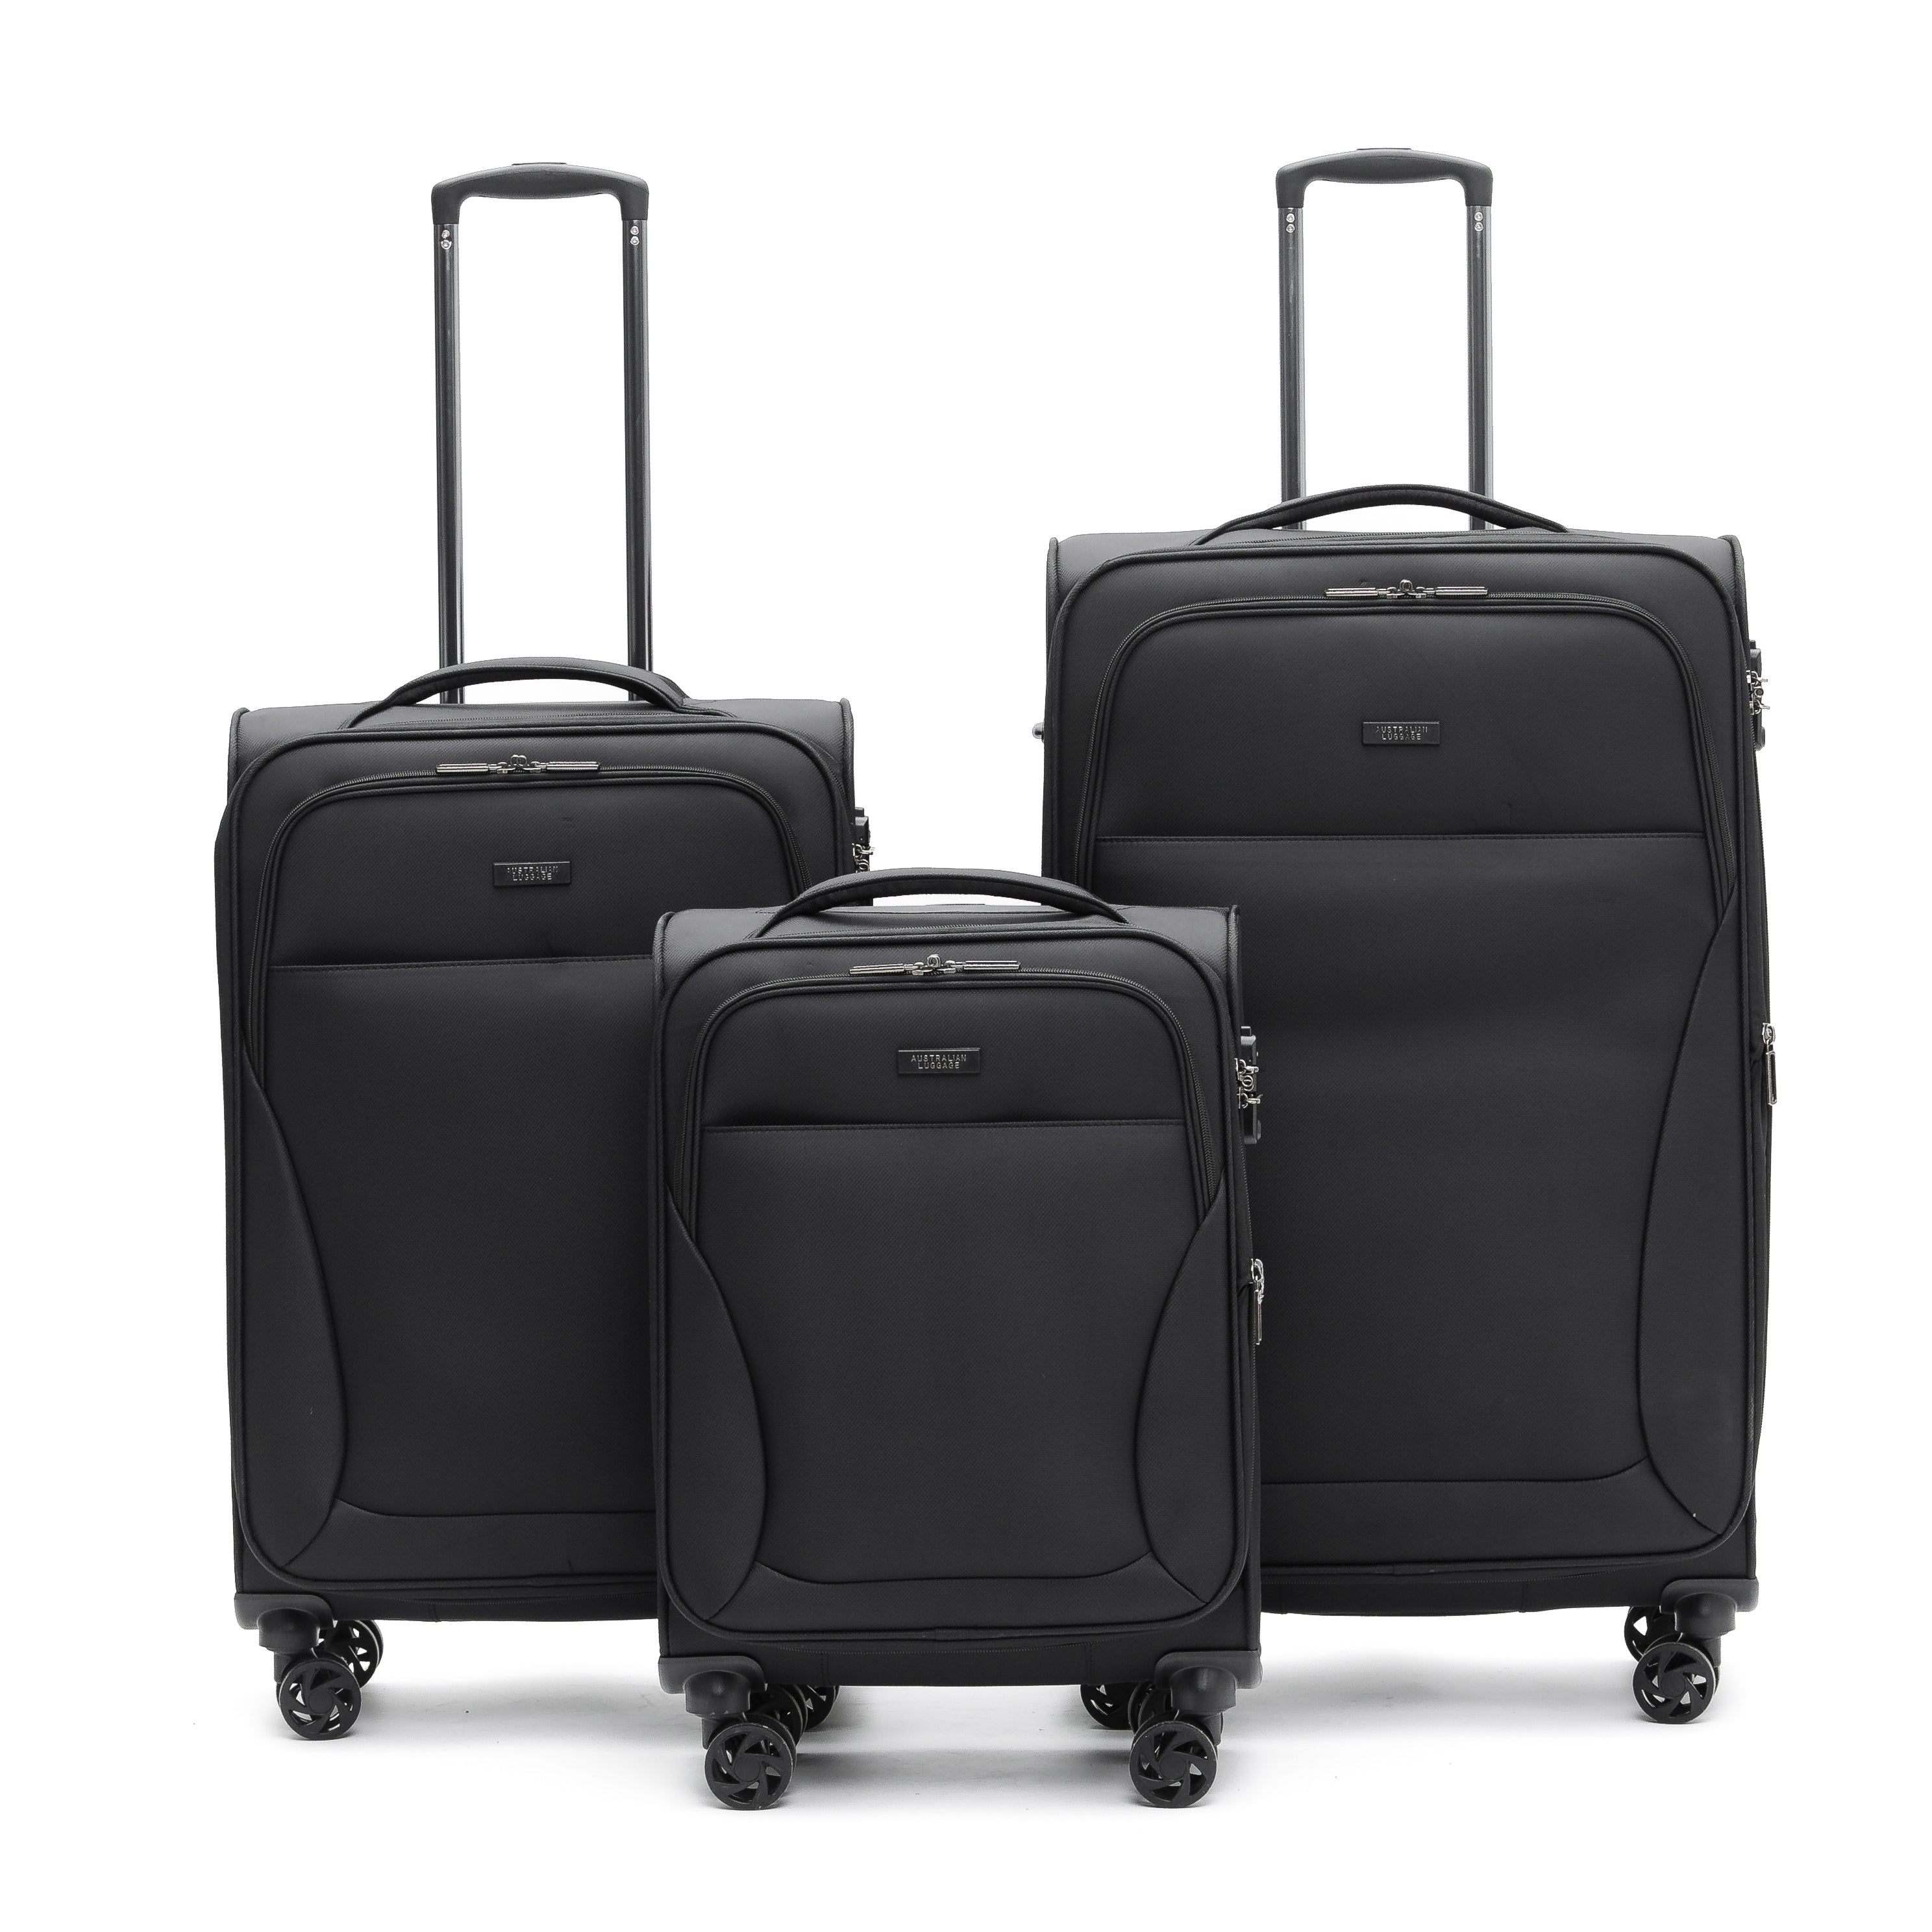 Aus Luggage - WINGS Set of 3 Suitcases - Black-2